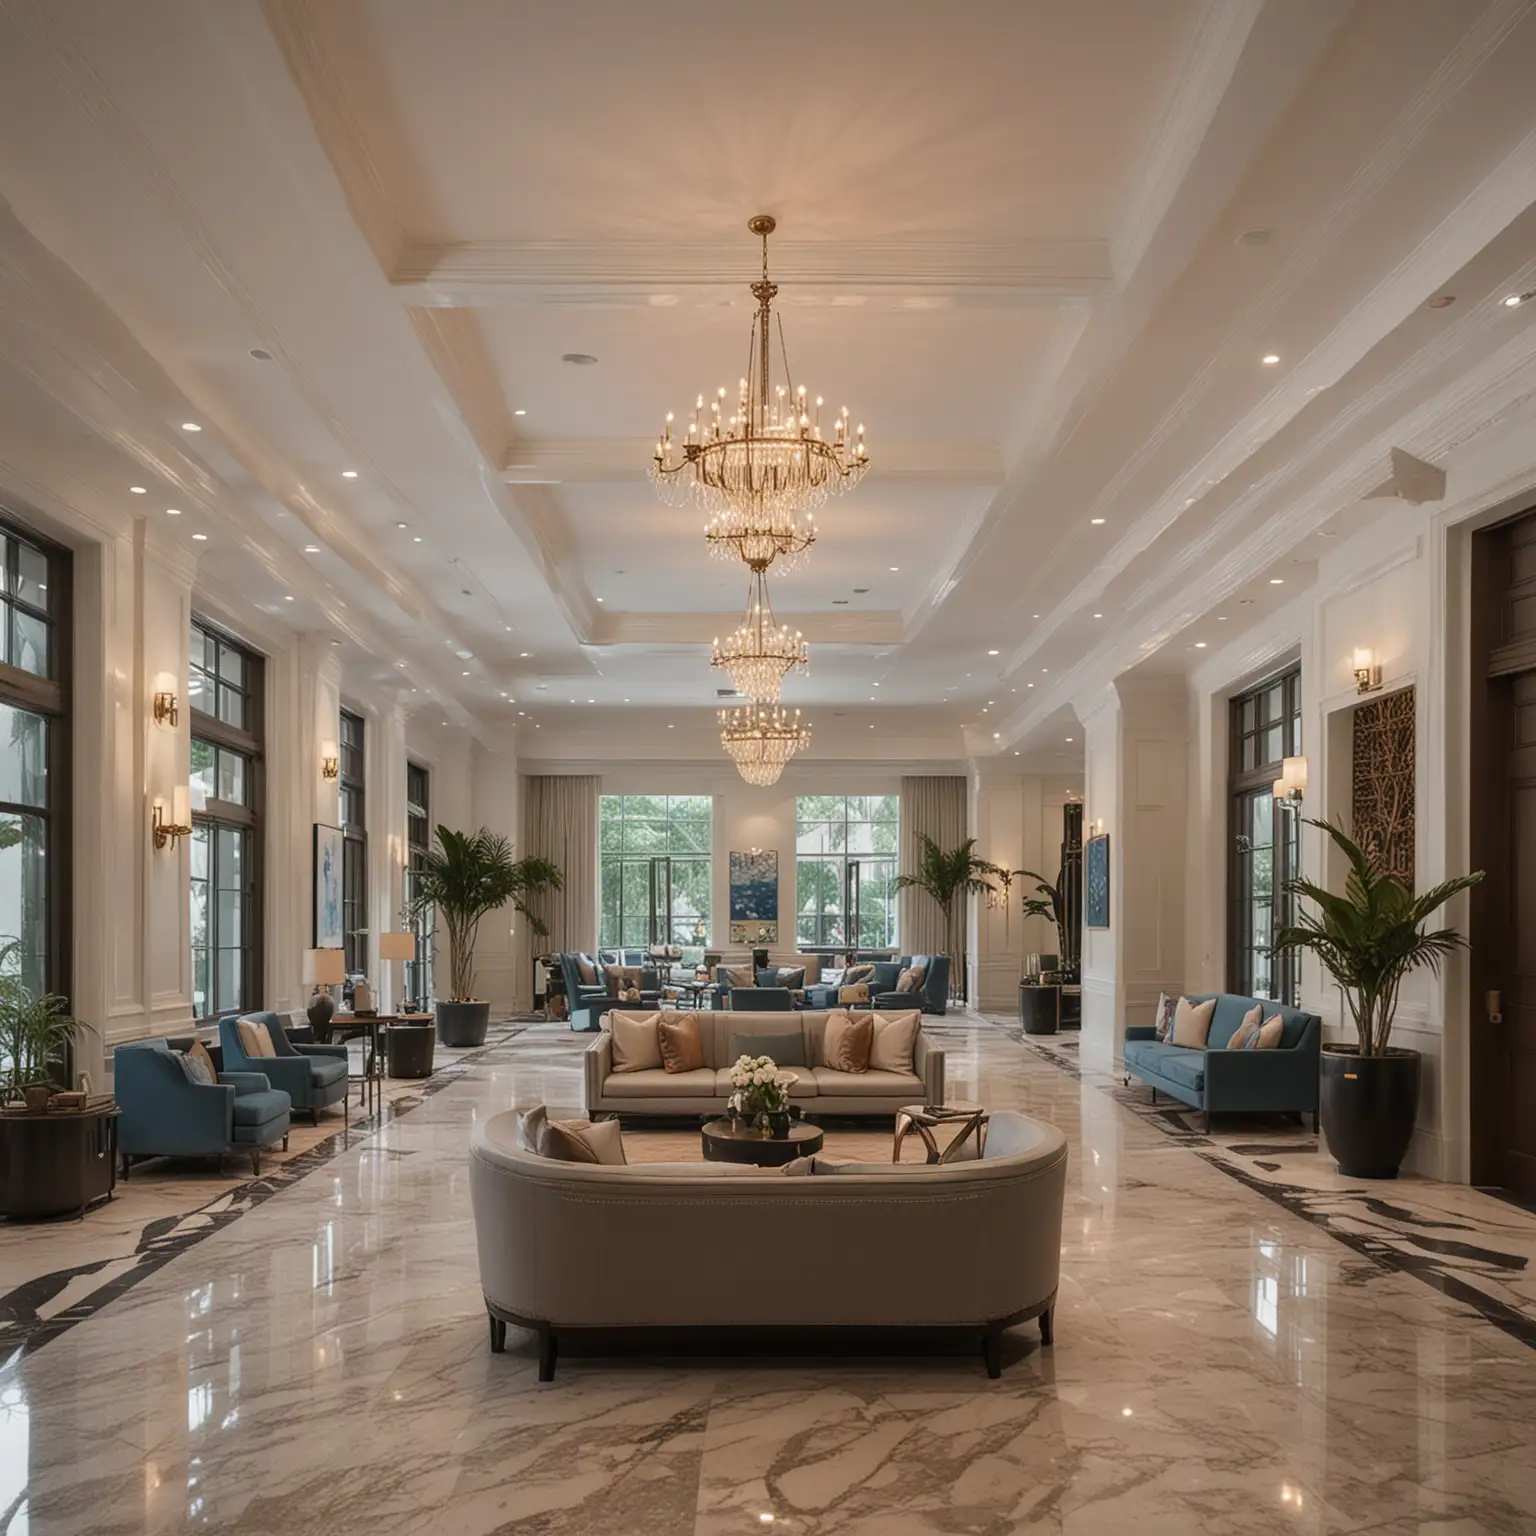 modern coastal colonial grand hotel lobby inspired by Hard Rock Hotel